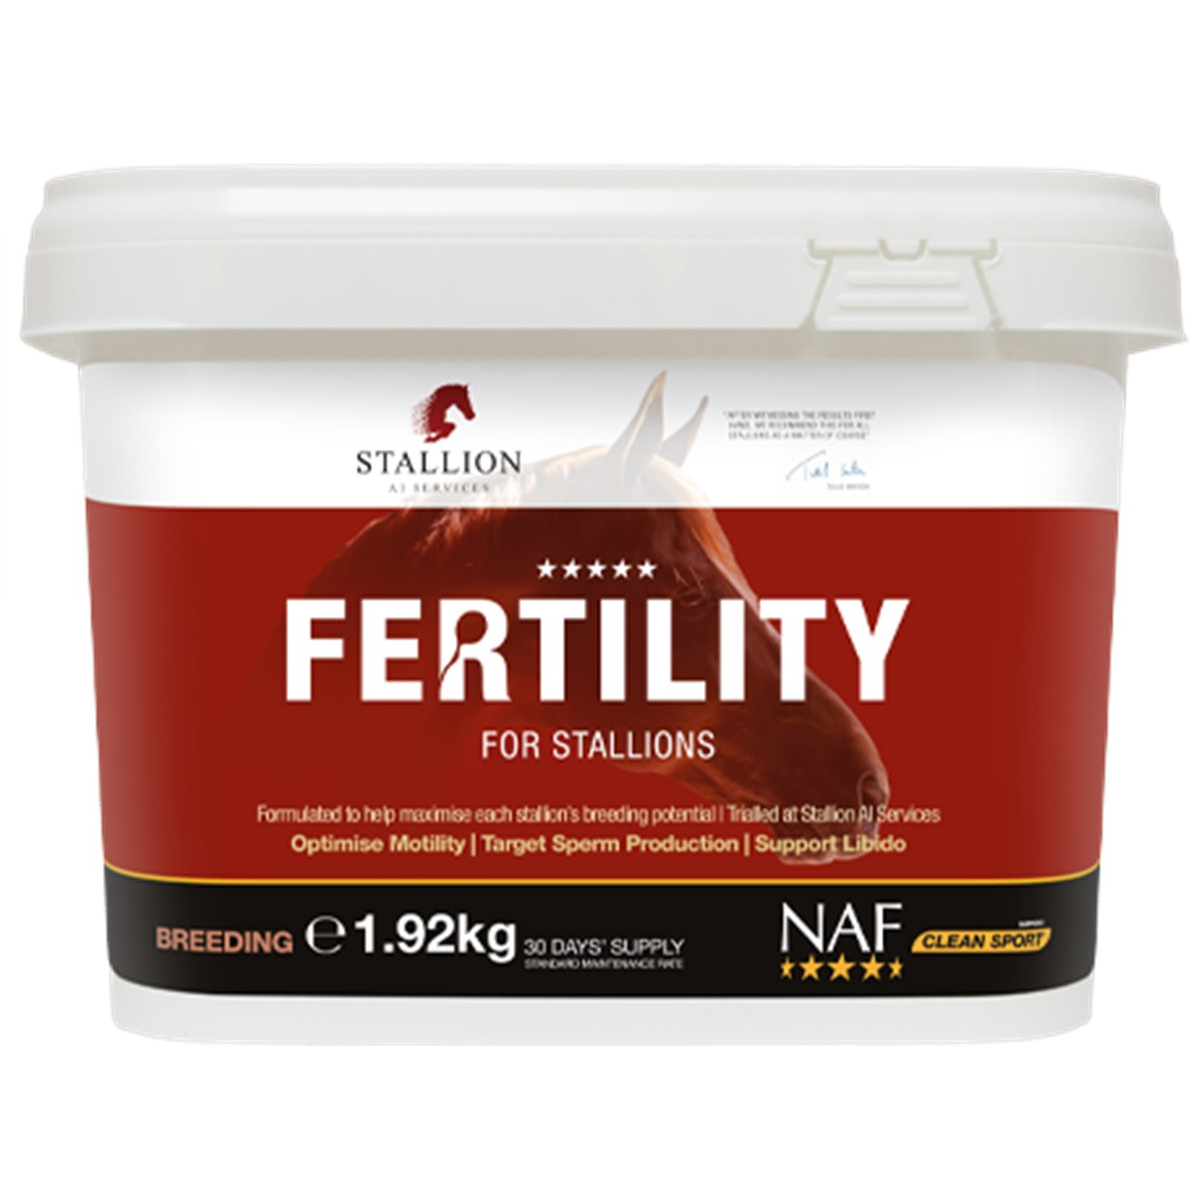 NAF 5* Fertility for Stallions